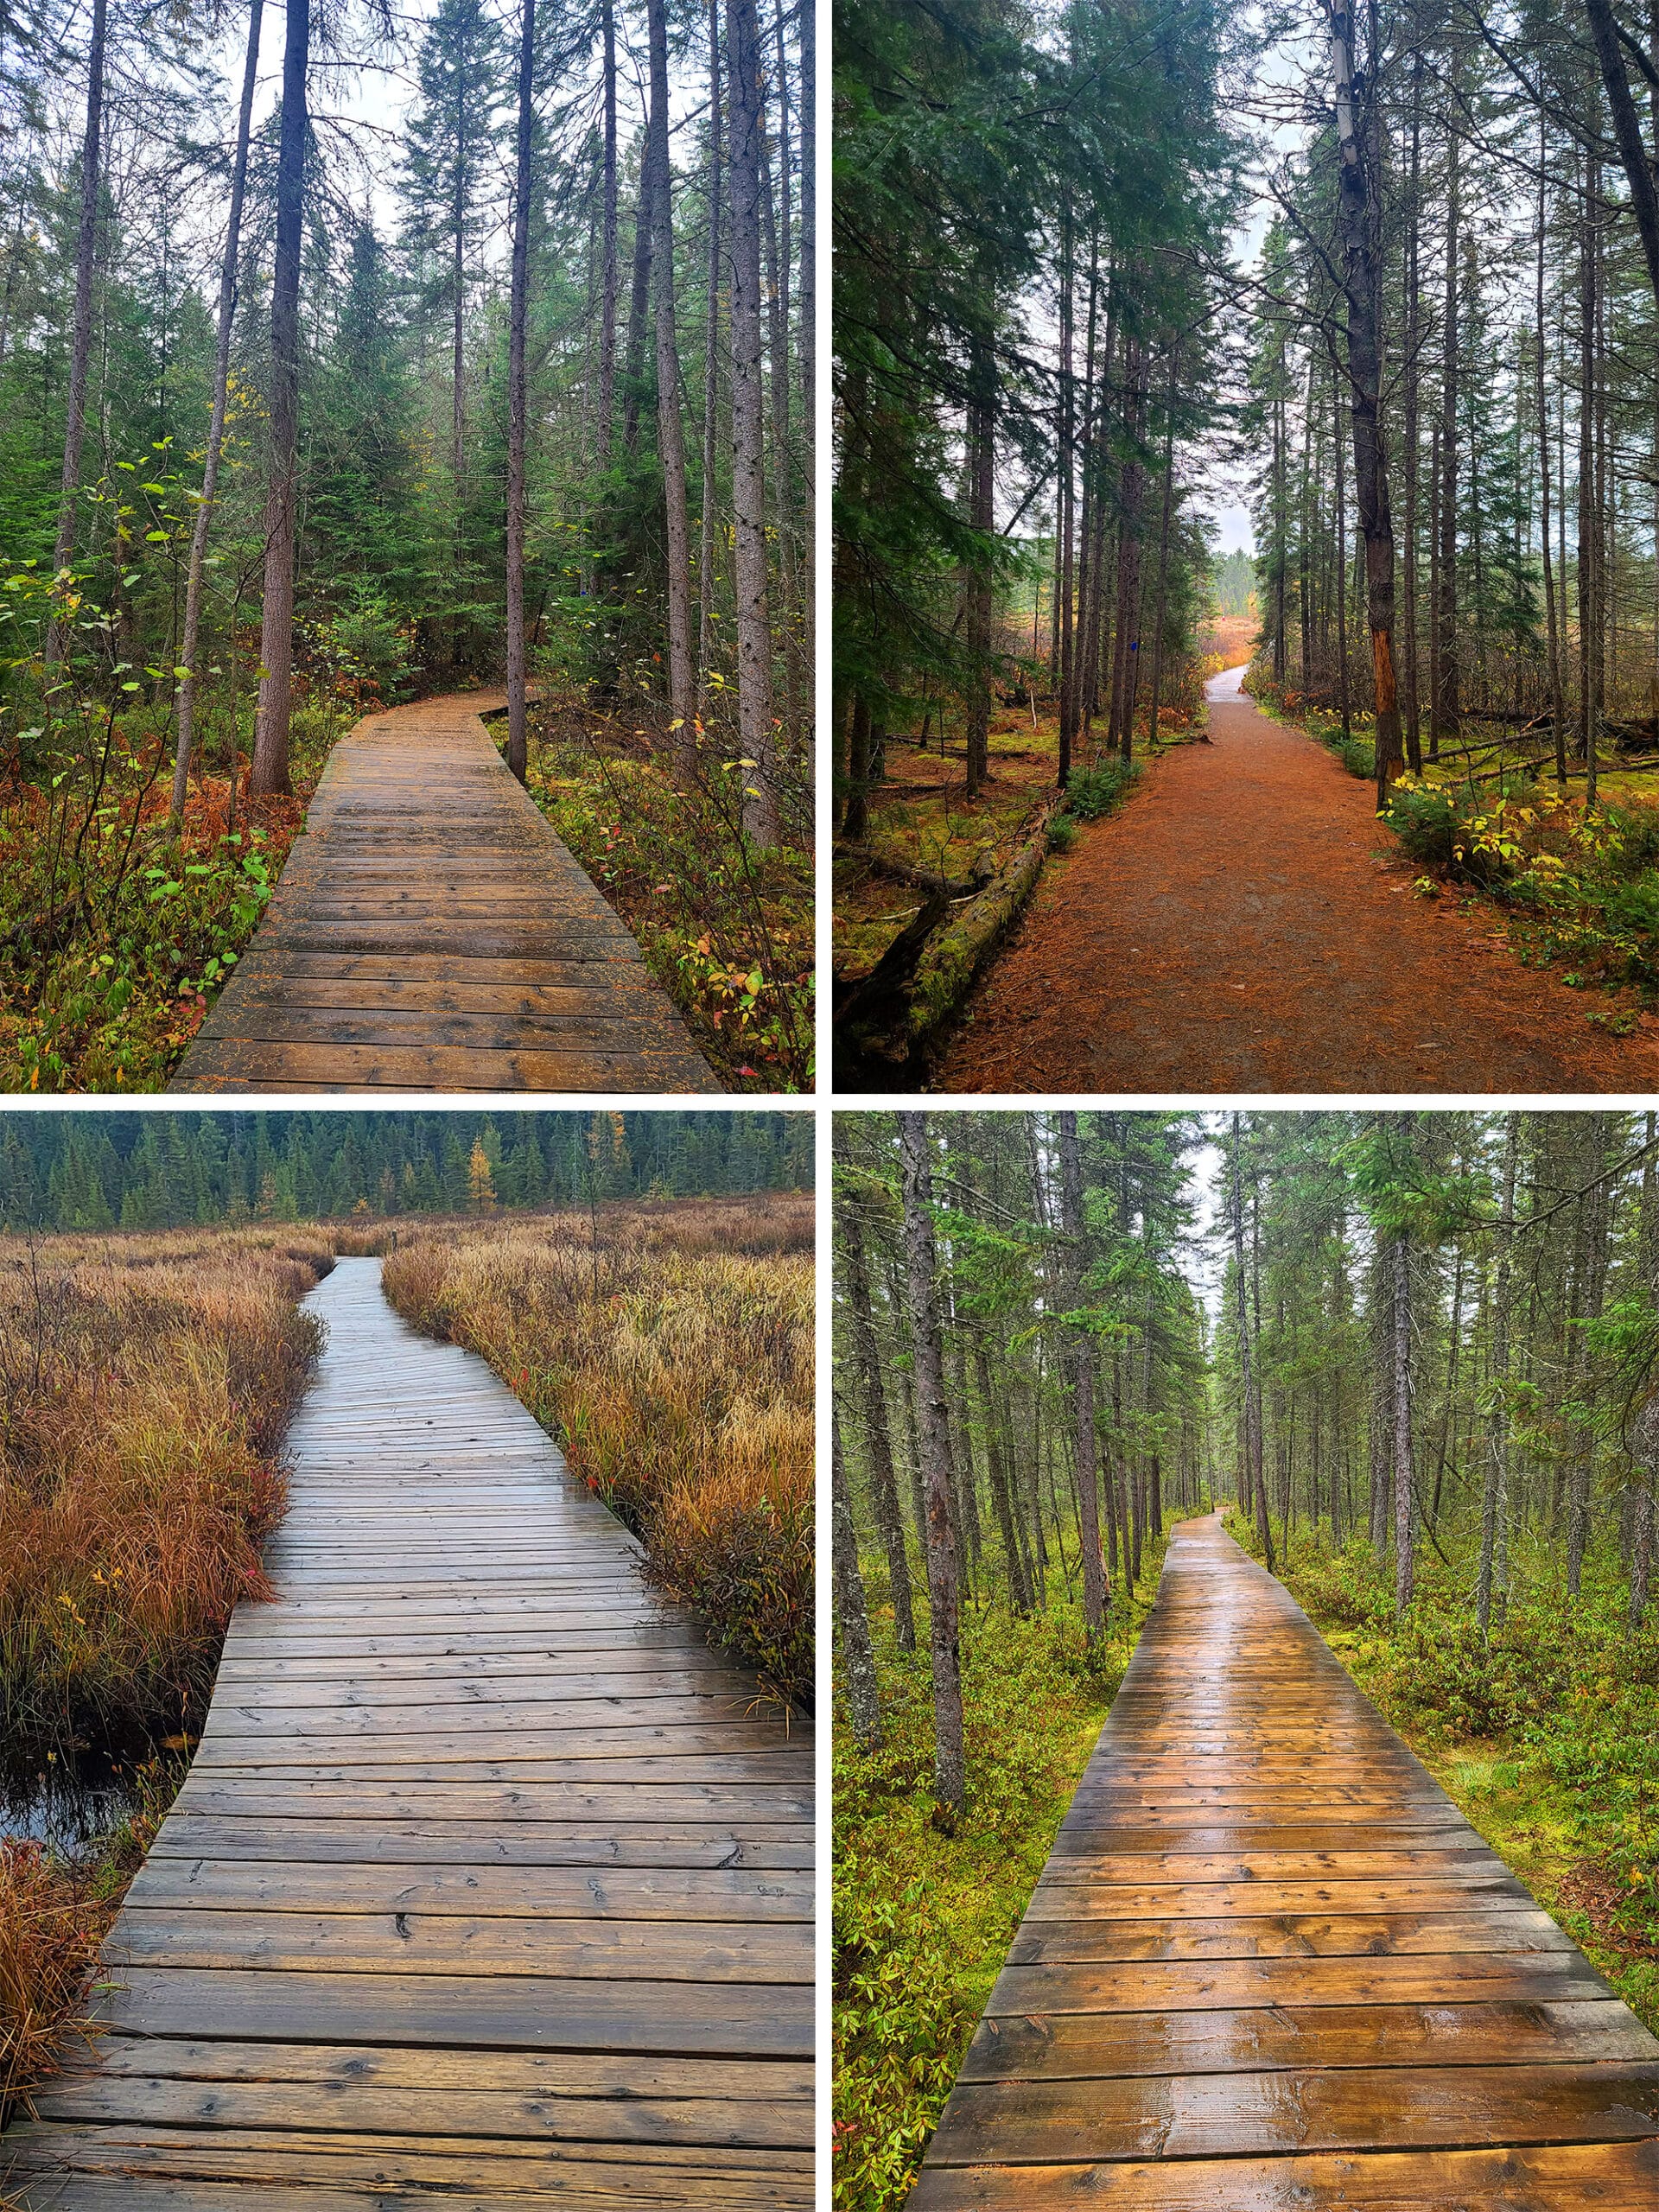 4 part compilation image showing various sections of the Algonquin Provincial Park Spruce Bog Boardwalk hiking trail.